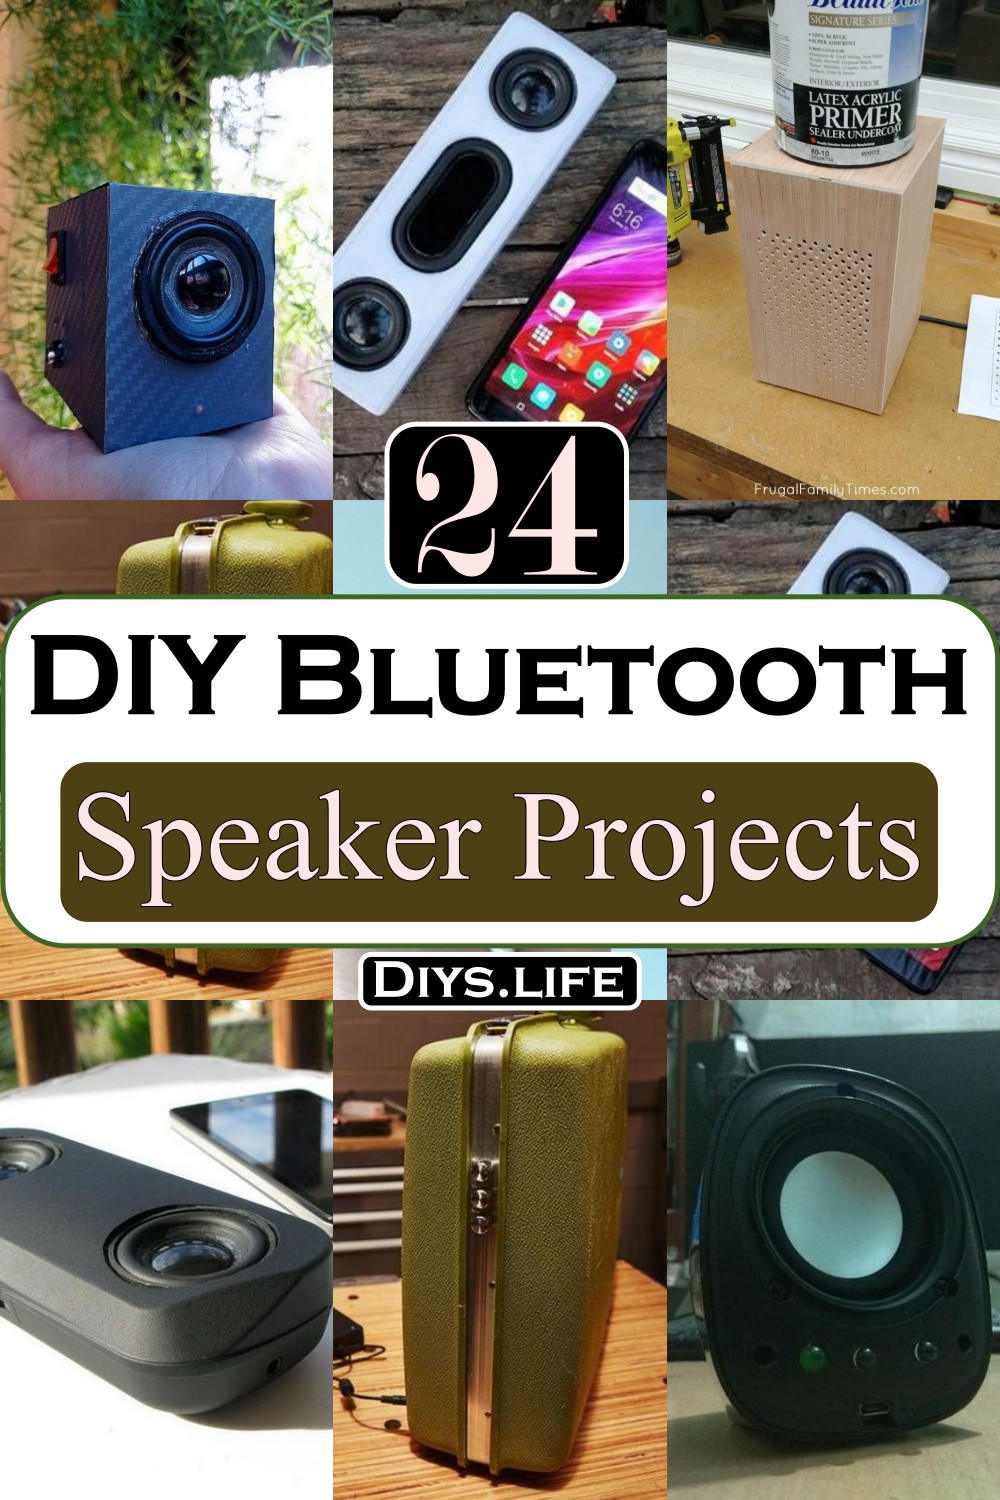 DIY Bluetooth Speaker Projects